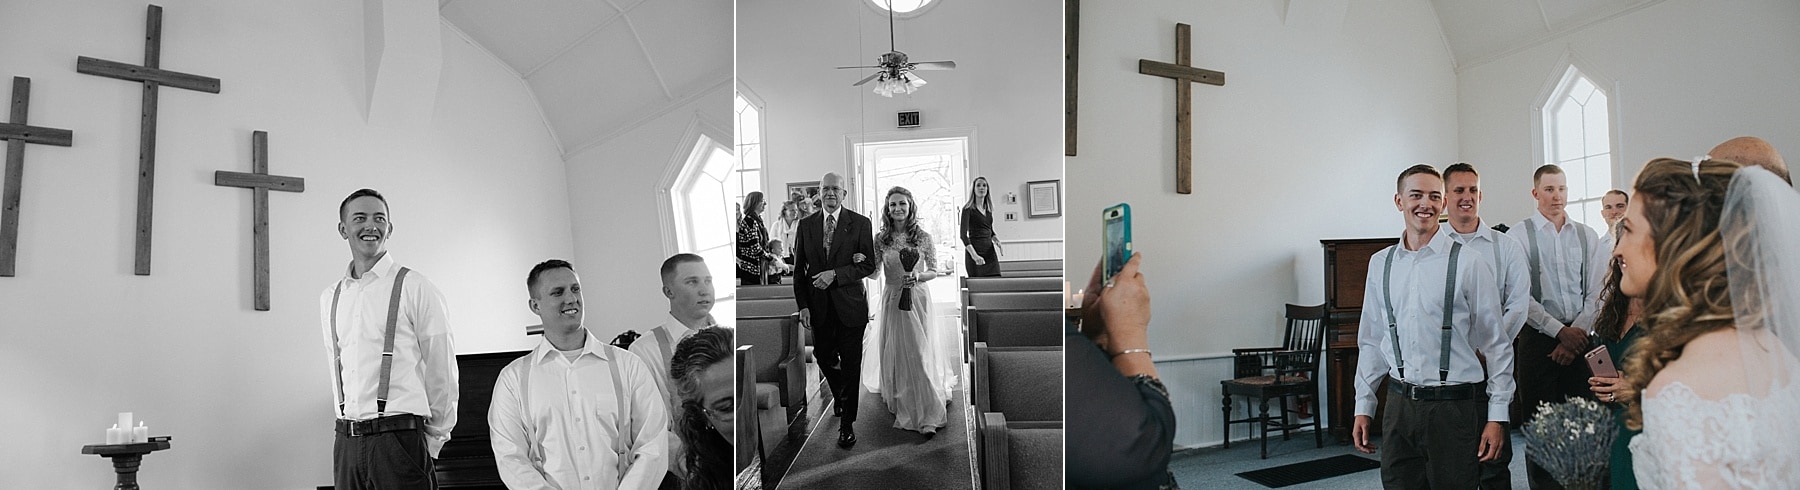 aisle, ceremony, wedding, church